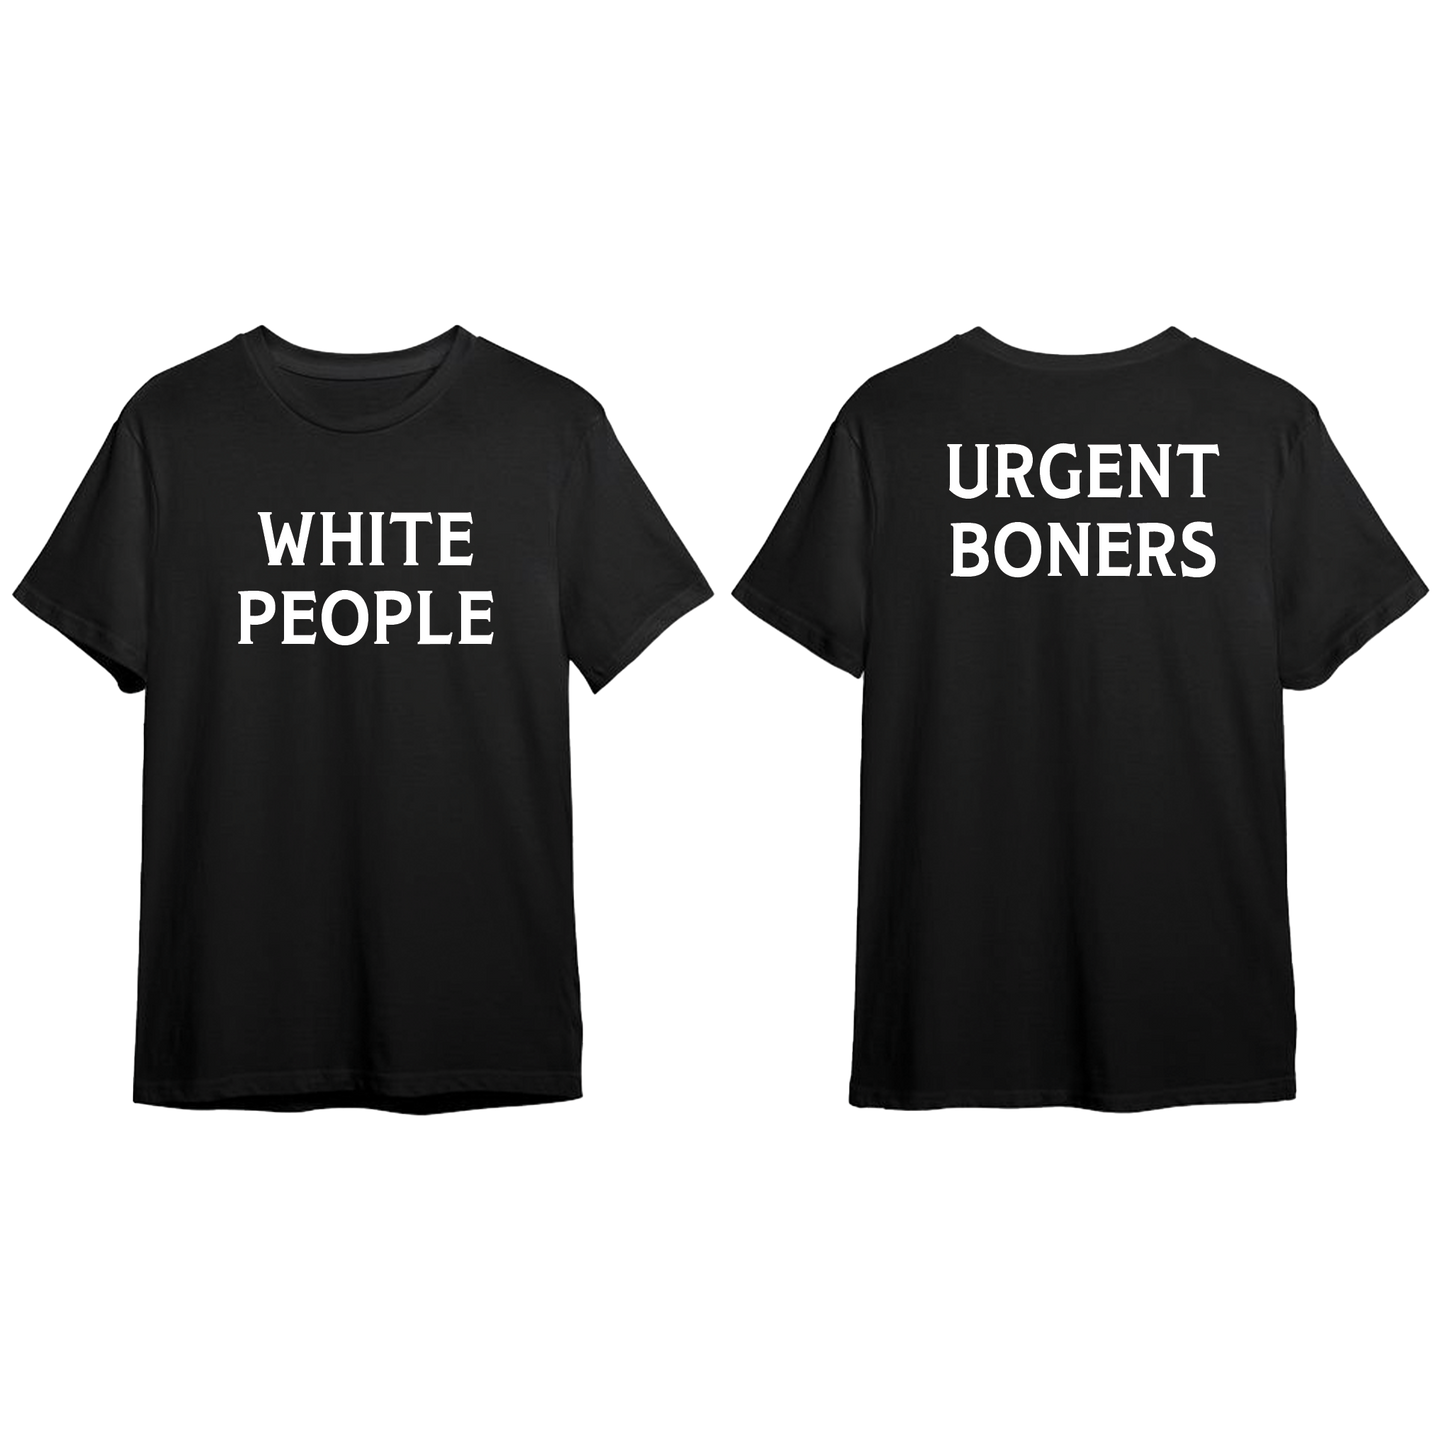 WHITE PEOPLE URGENT BONERS